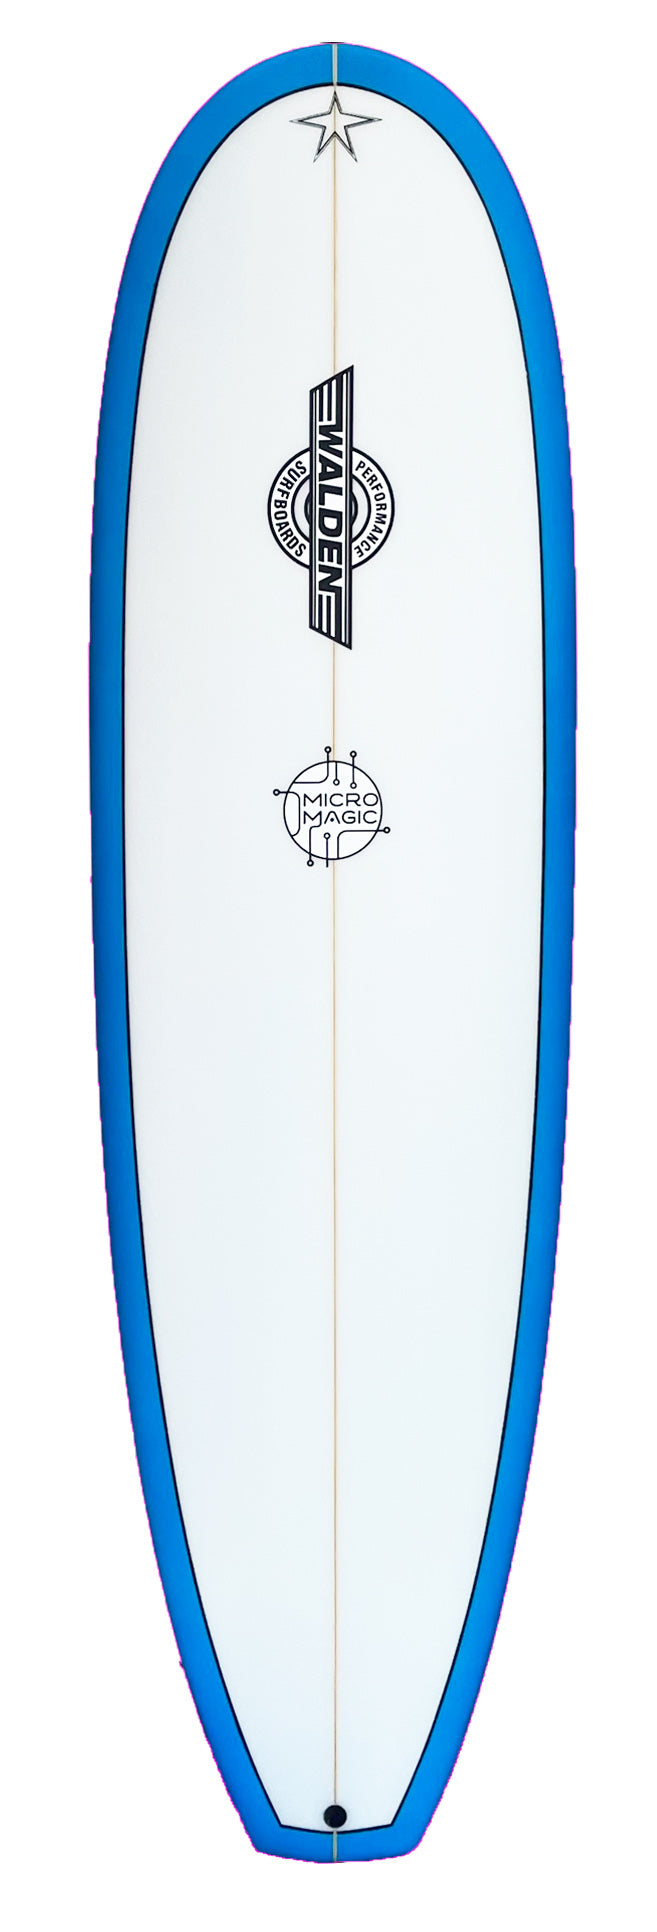 New! Surftech 6'8 Micro Magic – Walden Surfboards